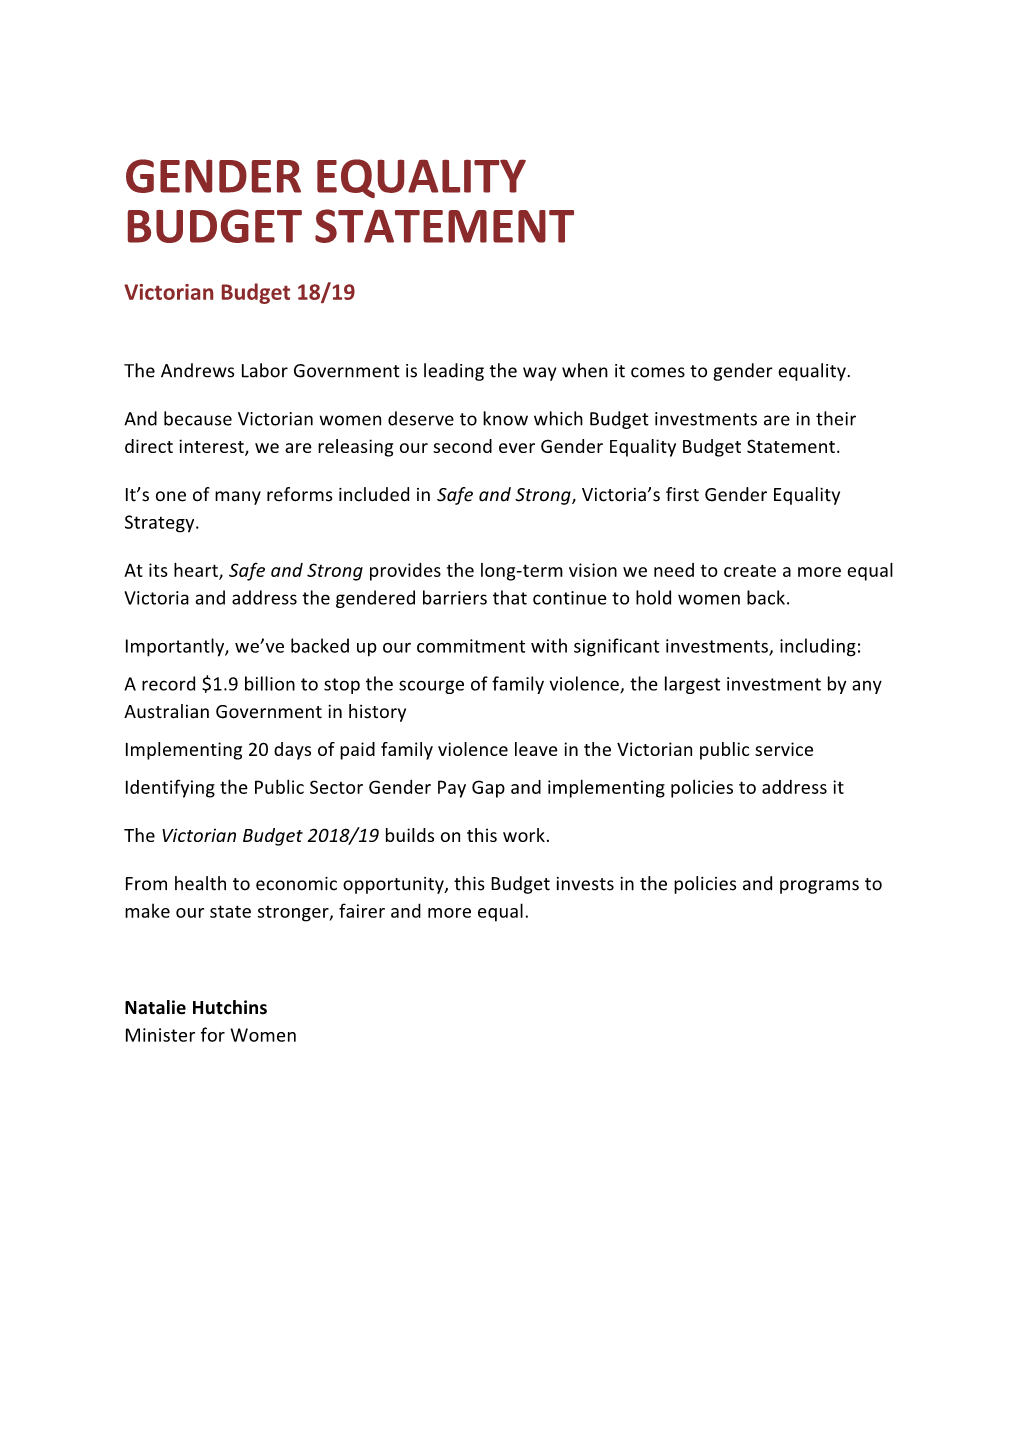 Gender Equality Budget Statement